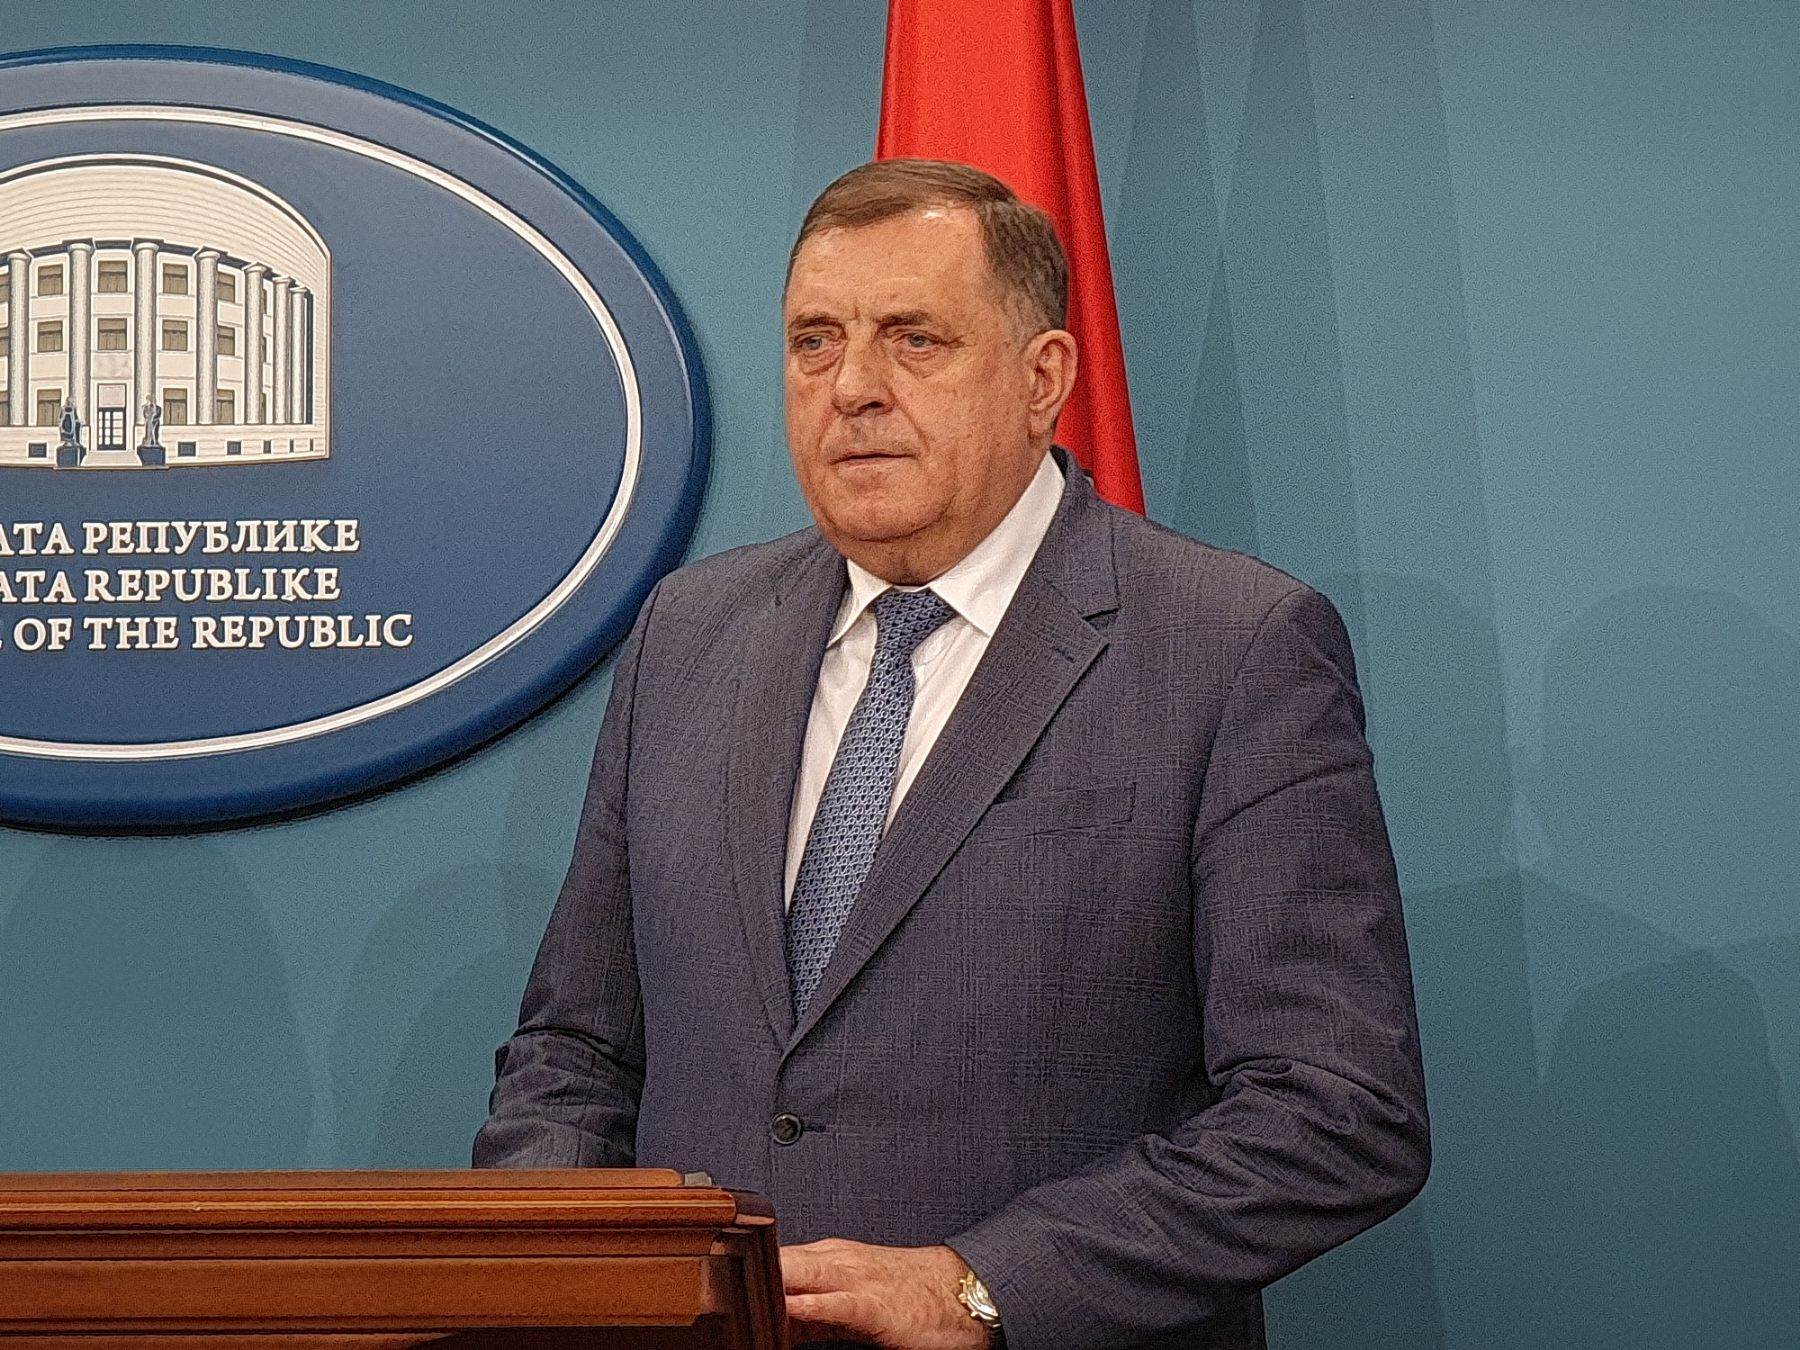  Dodik će podržati Vučićev protest u Beogradu 